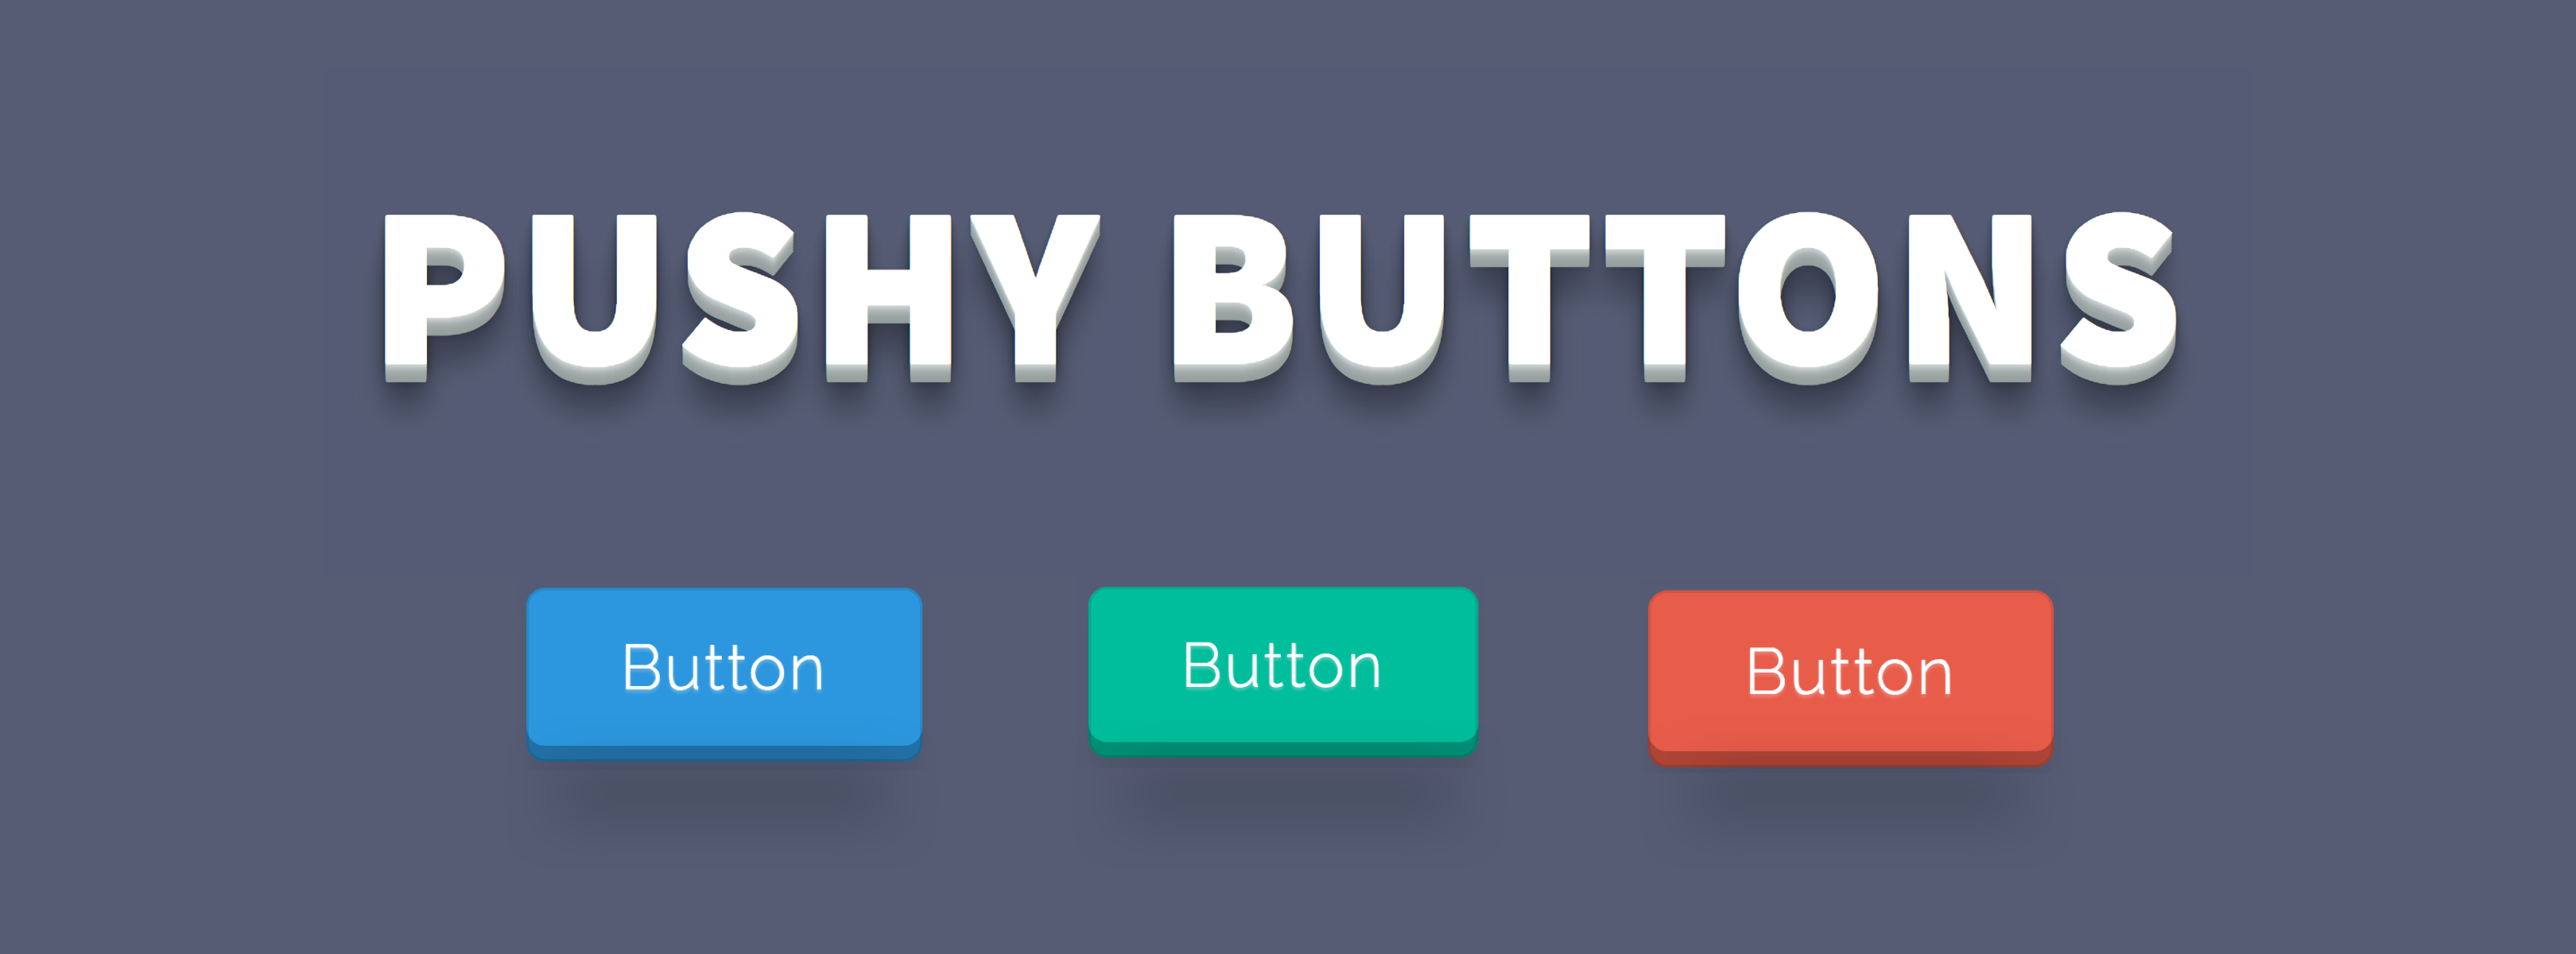 Pushy Buttons